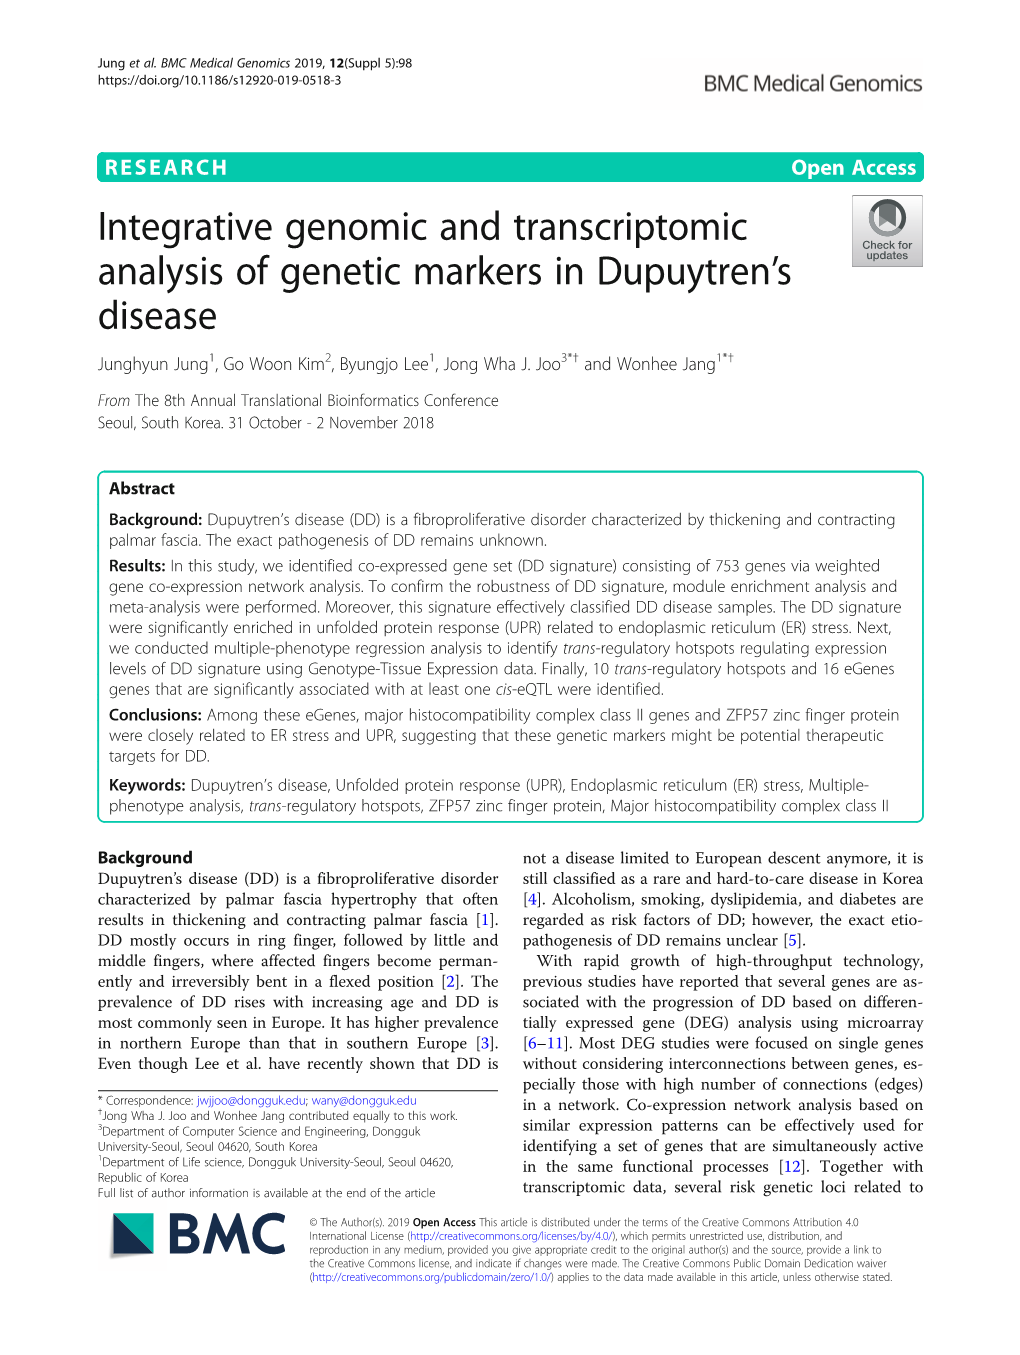 Integrative Genomic and Transcriptomic Analysis of Genetic Markers in Dupuytren’S Disease Junghyun Jung1, Go Woon Kim2, Byungjo Lee1, Jong Wha J